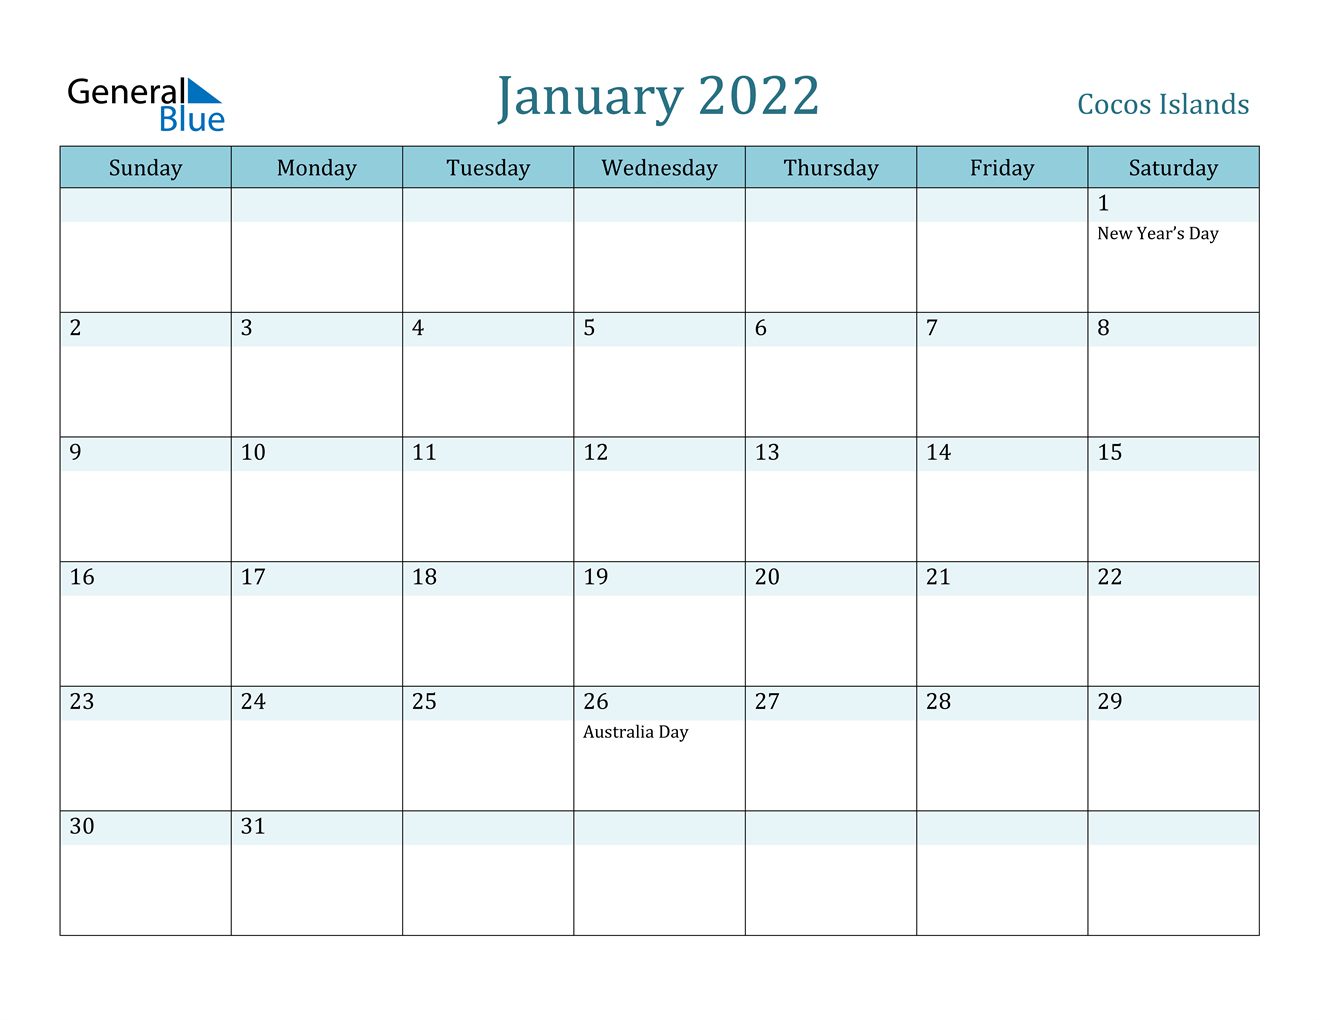 January 2022 Calendar - Cocos Islands  December 2022 January 2022 February 2022 Calendar